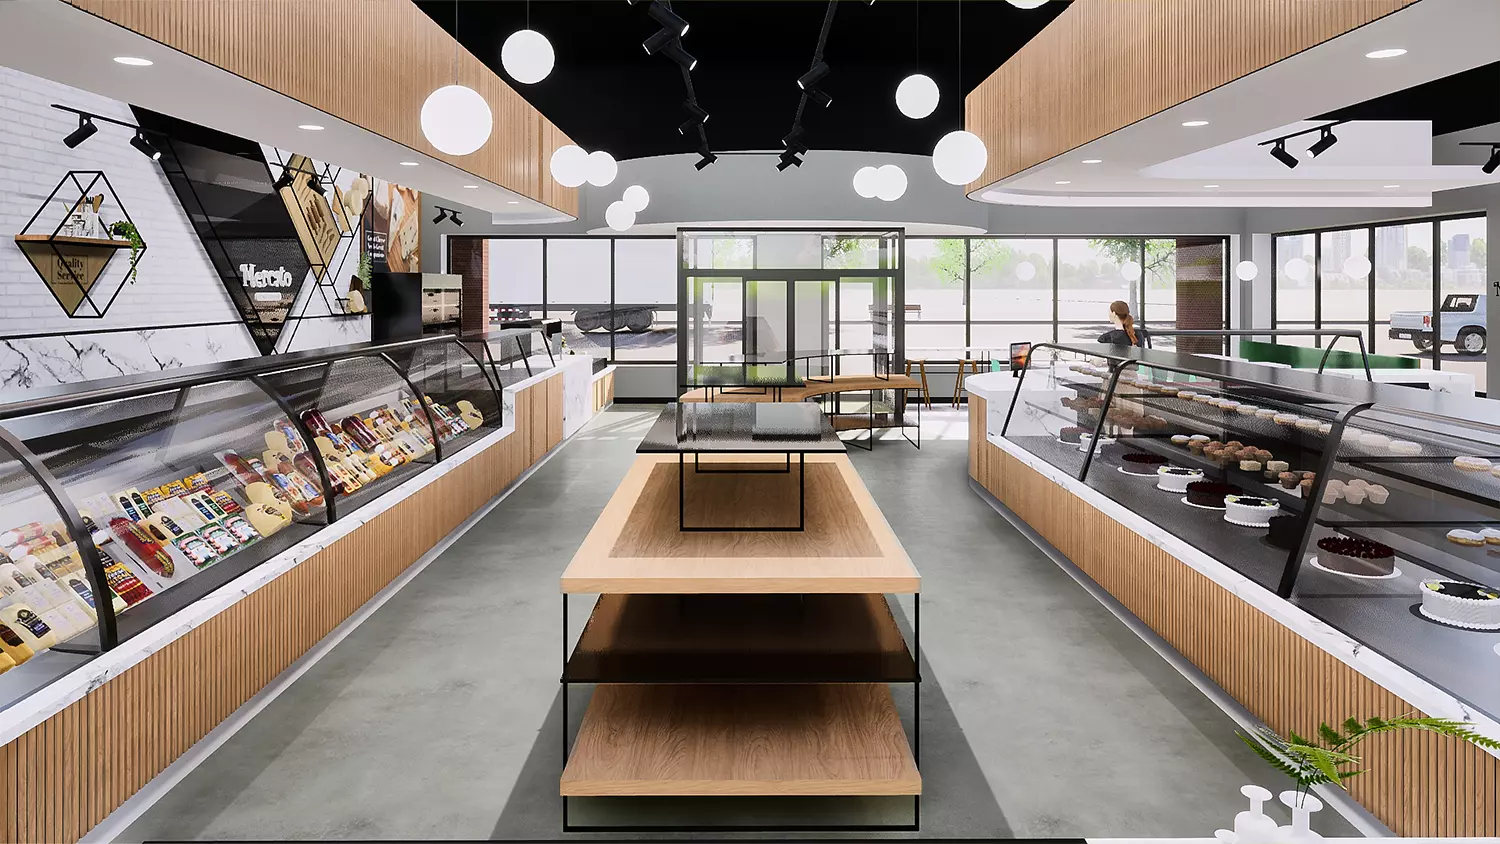 Interior design project for Mercato Fine Foods. Designed 3D rendering for food market